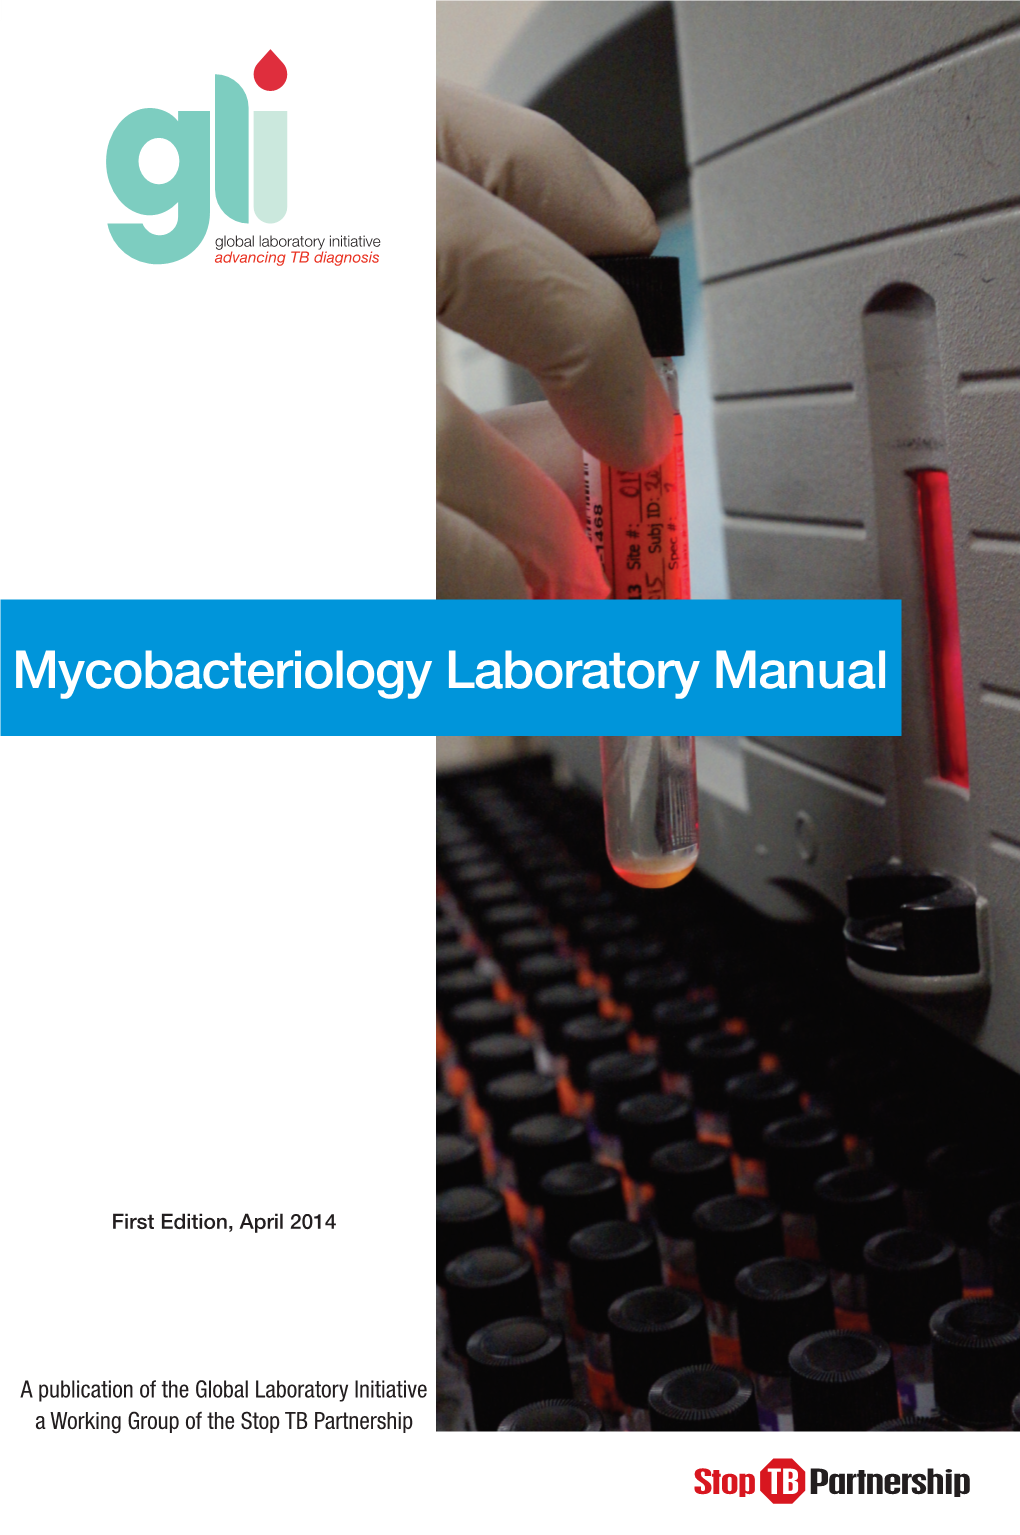 GLI Mycobacteriology Laboratory Manual